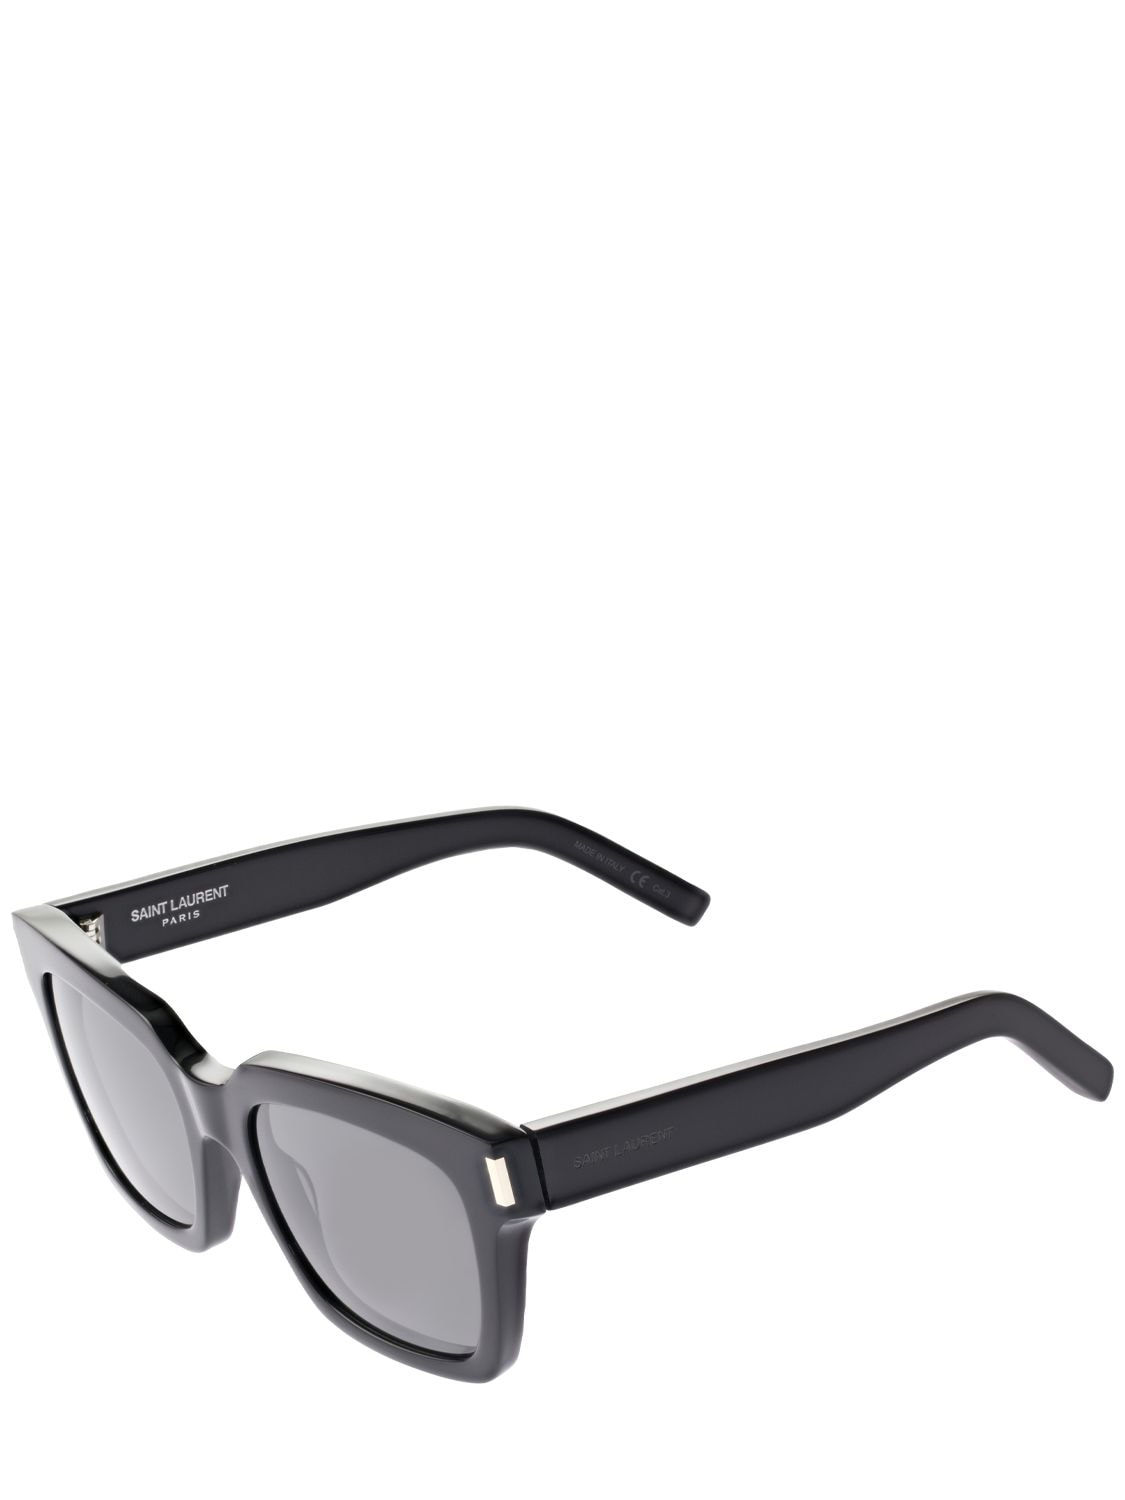 Saint Laurent - SL 556 Acetate Sunglasses - Black - 01